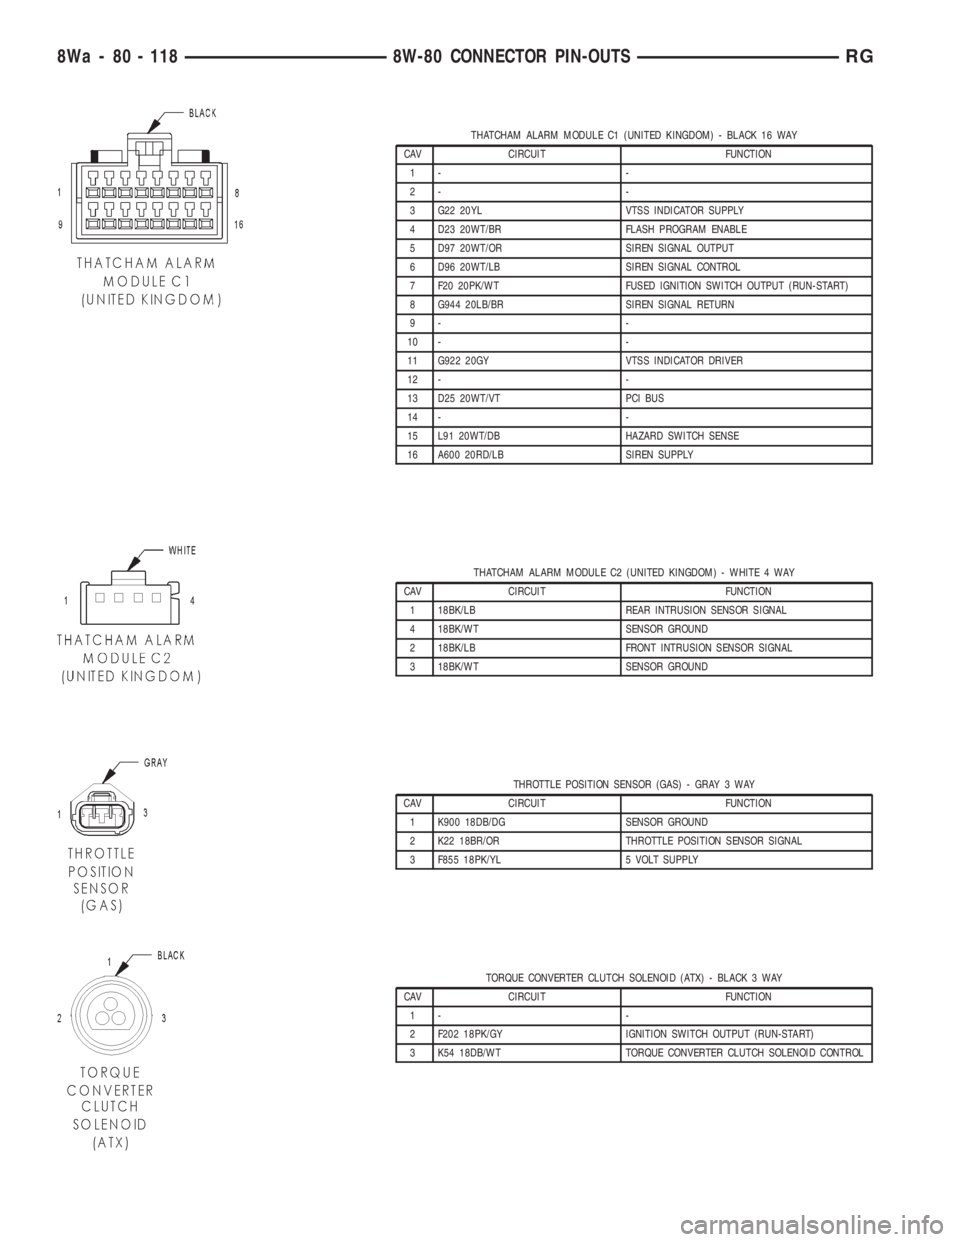 CHRYSLER VOYAGER 2001  Service Manual THATCHAM ALARM MODULE C1 (UNITED KINGDOM) - BLACK 16 WAY
CAV CIRCUIT FUNCTION
1- -
2- -
3 G22 20YL VTSS INDICATOR SUPPLY
4 D23 20WT/BR FLASH PROGRAM ENABLE
5 D97 20WT/OR SIREN SIGNAL OUTPUT
6 D96 20WT